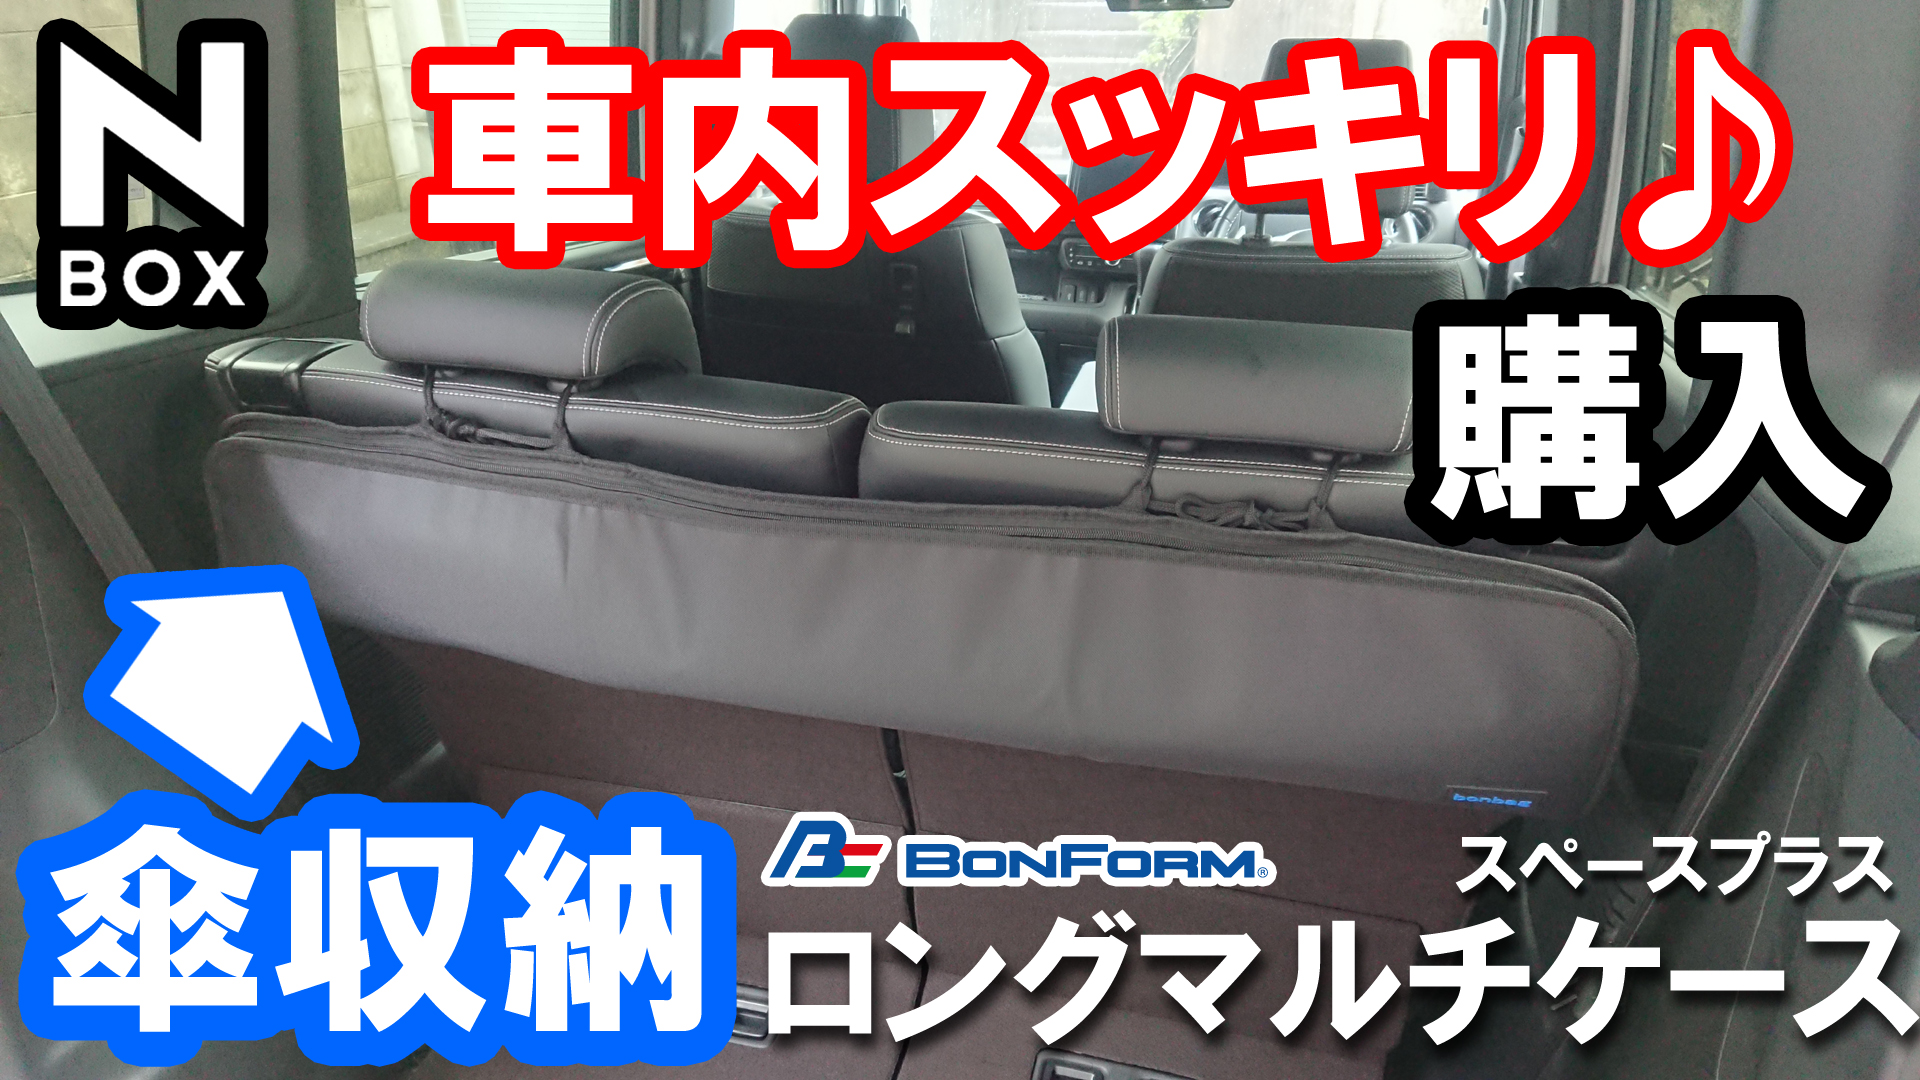 Honda N Box 車内をスッキリさせるために傘収納を買ってみた Momotaro Blog